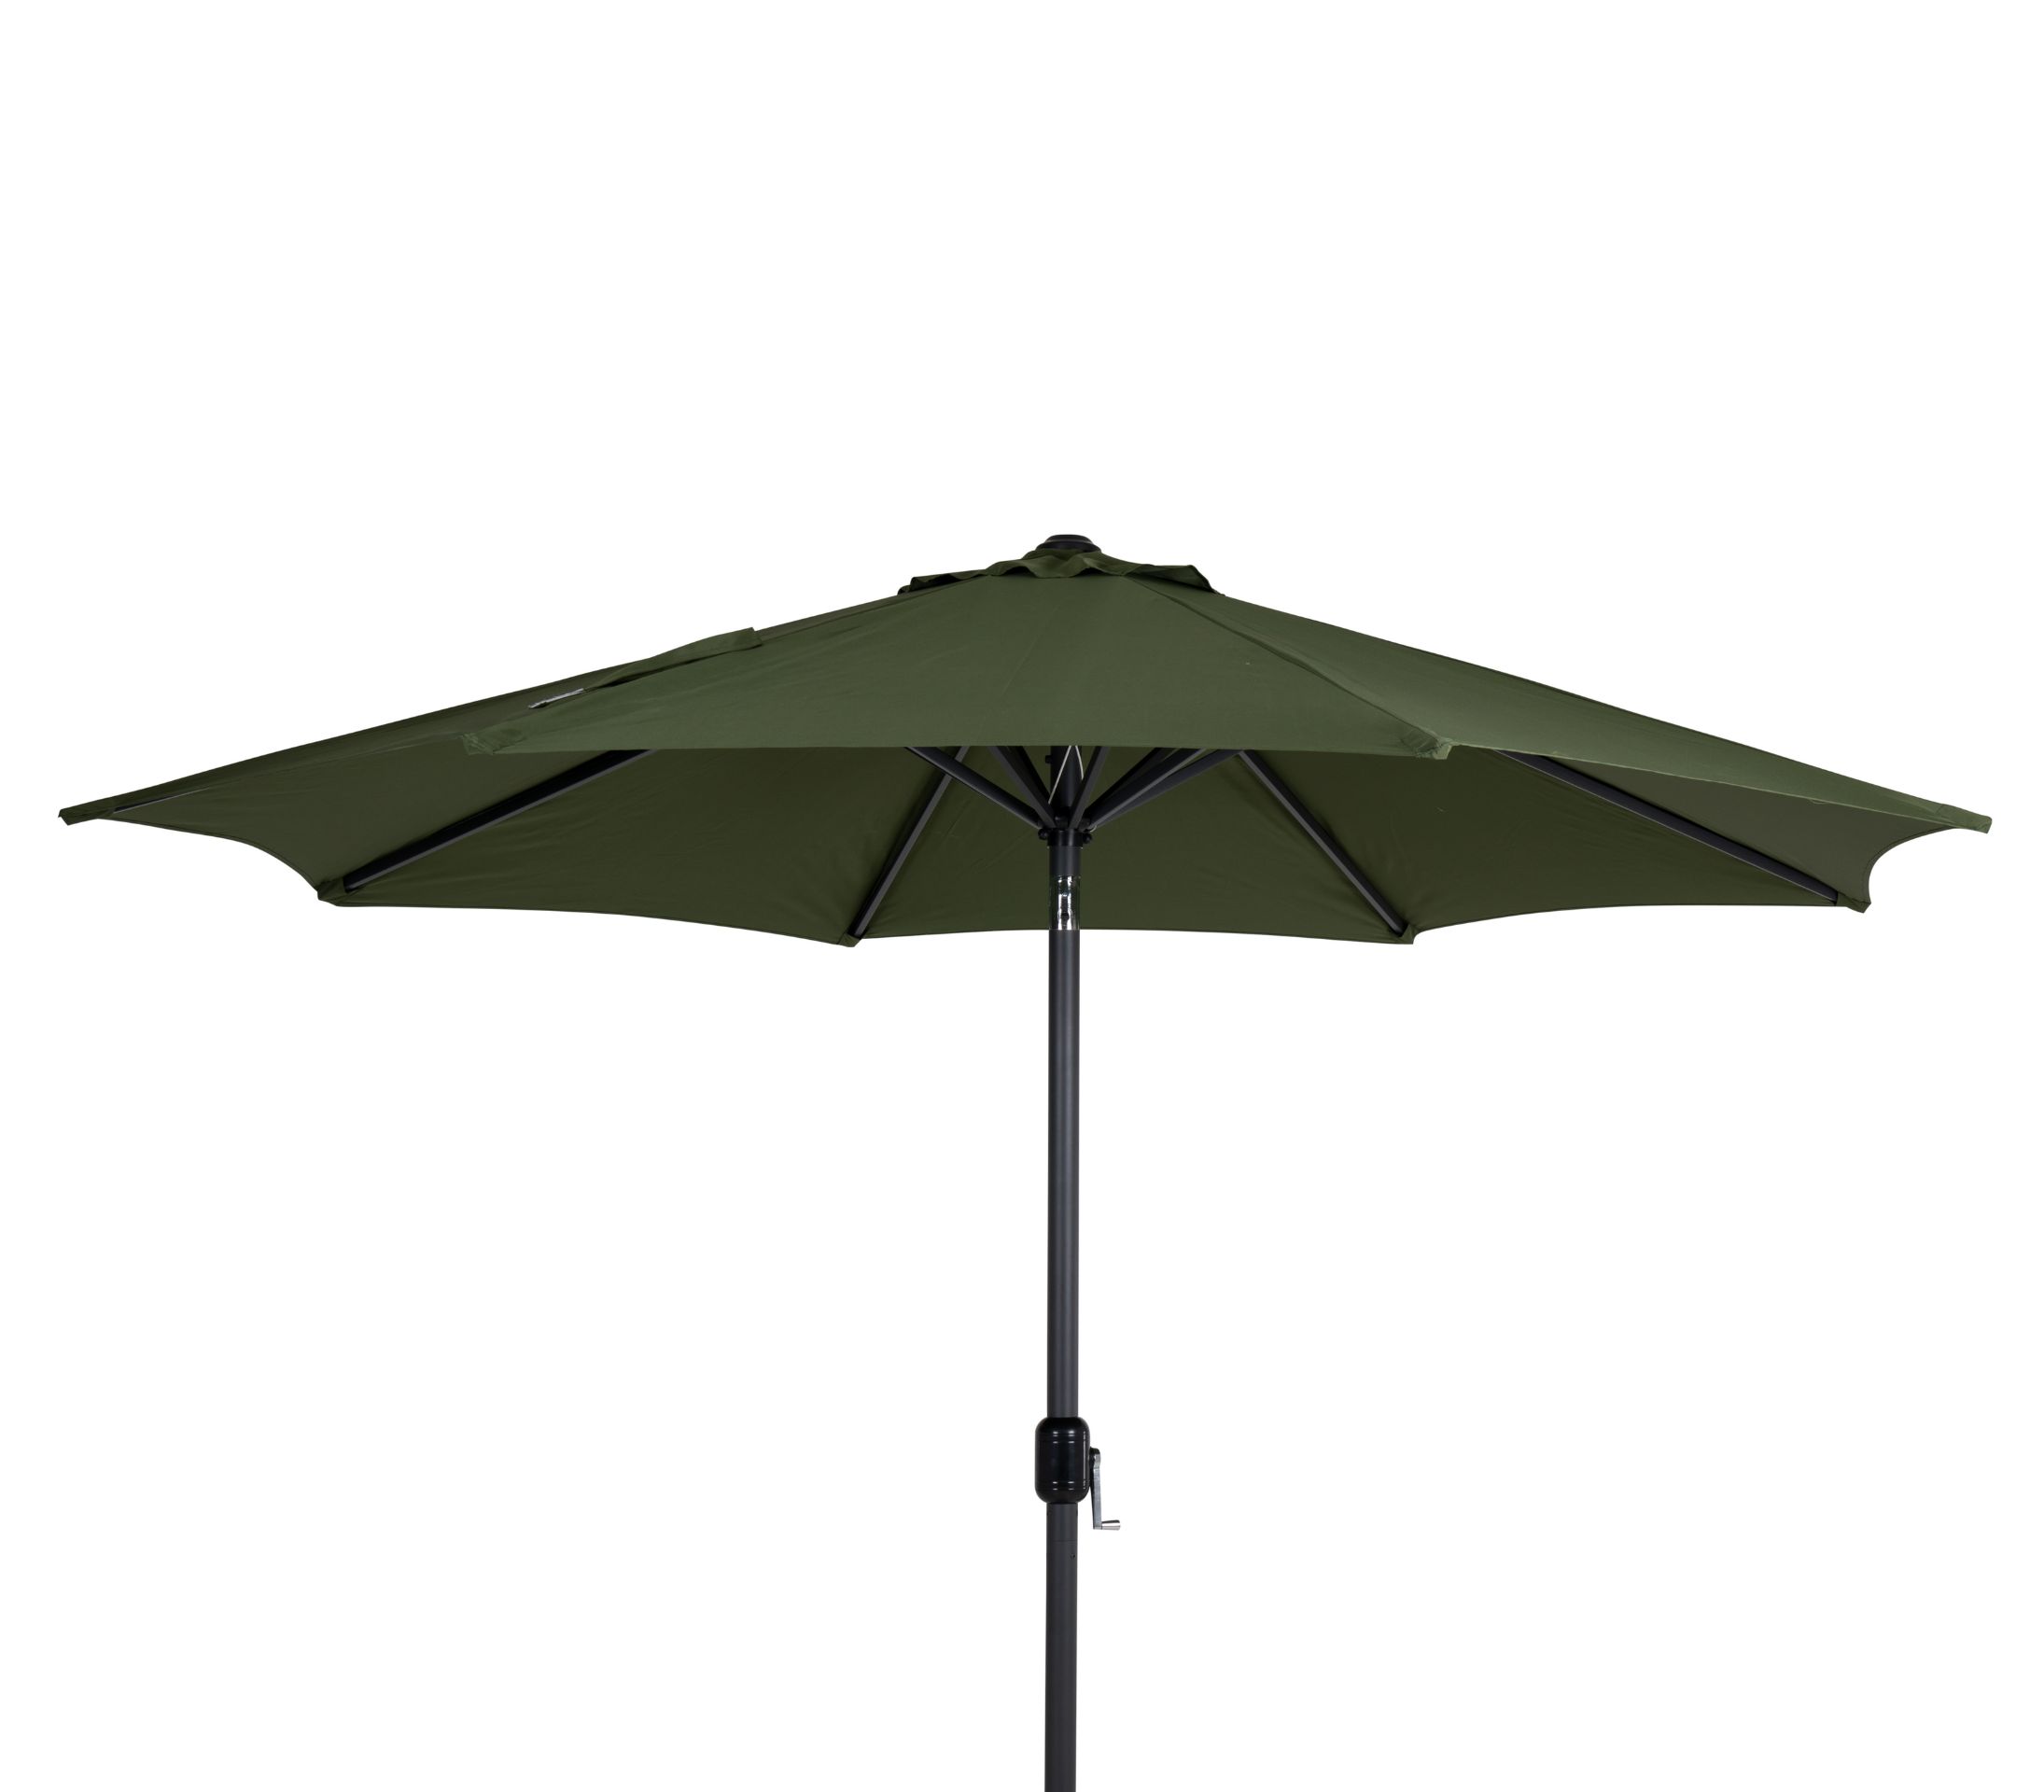 Lauko skėtis nuo saulės Cambre_Bjarnum baldai